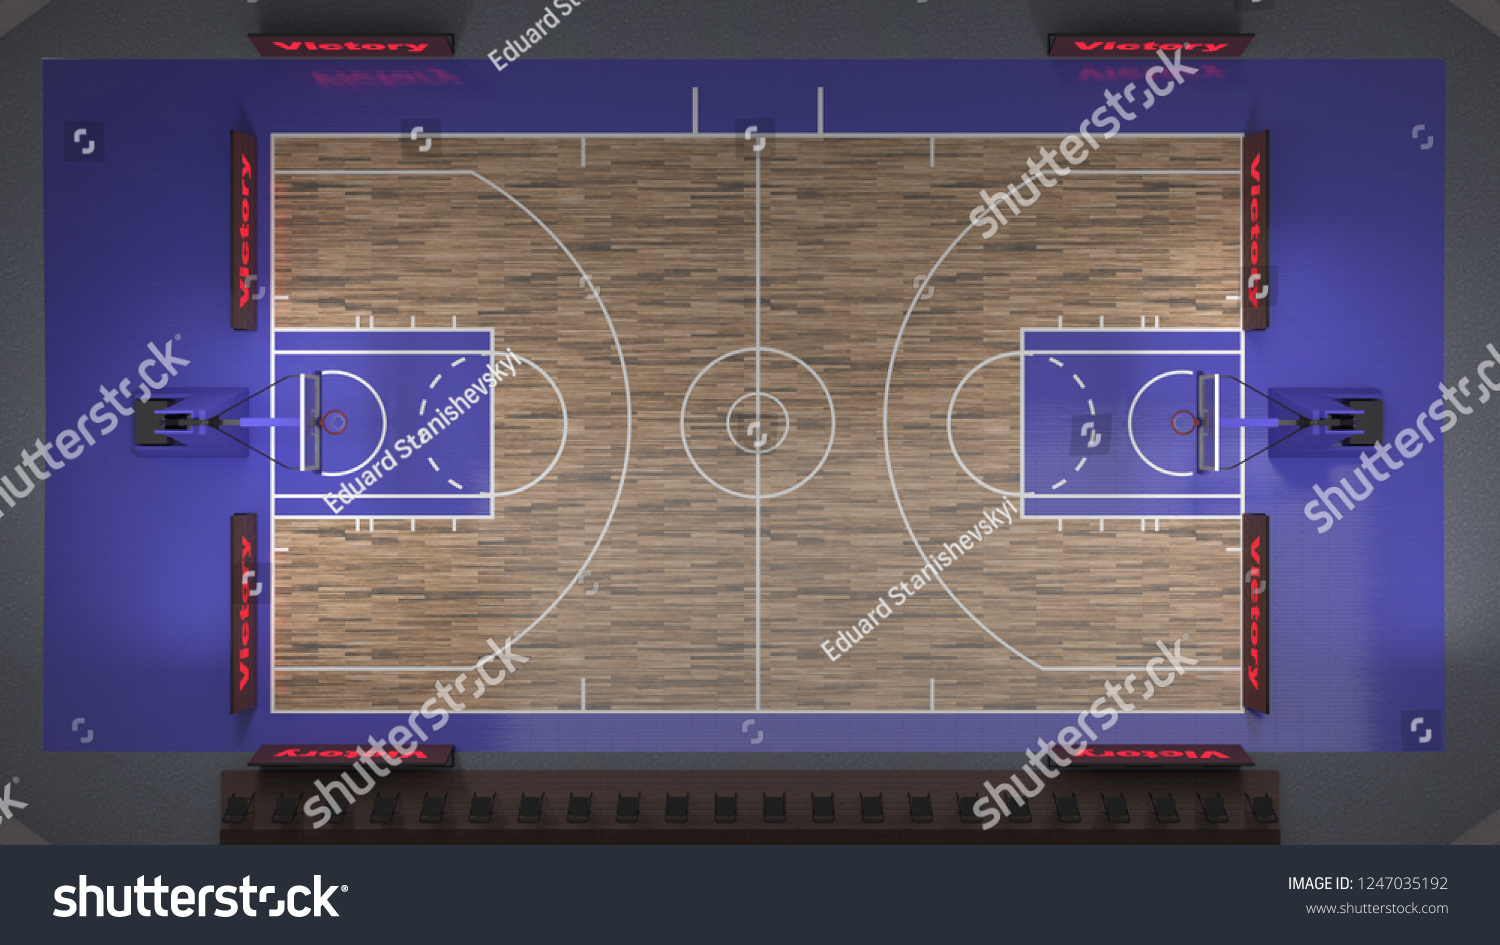 Баскетбольная площадка 3х3 вид сверху